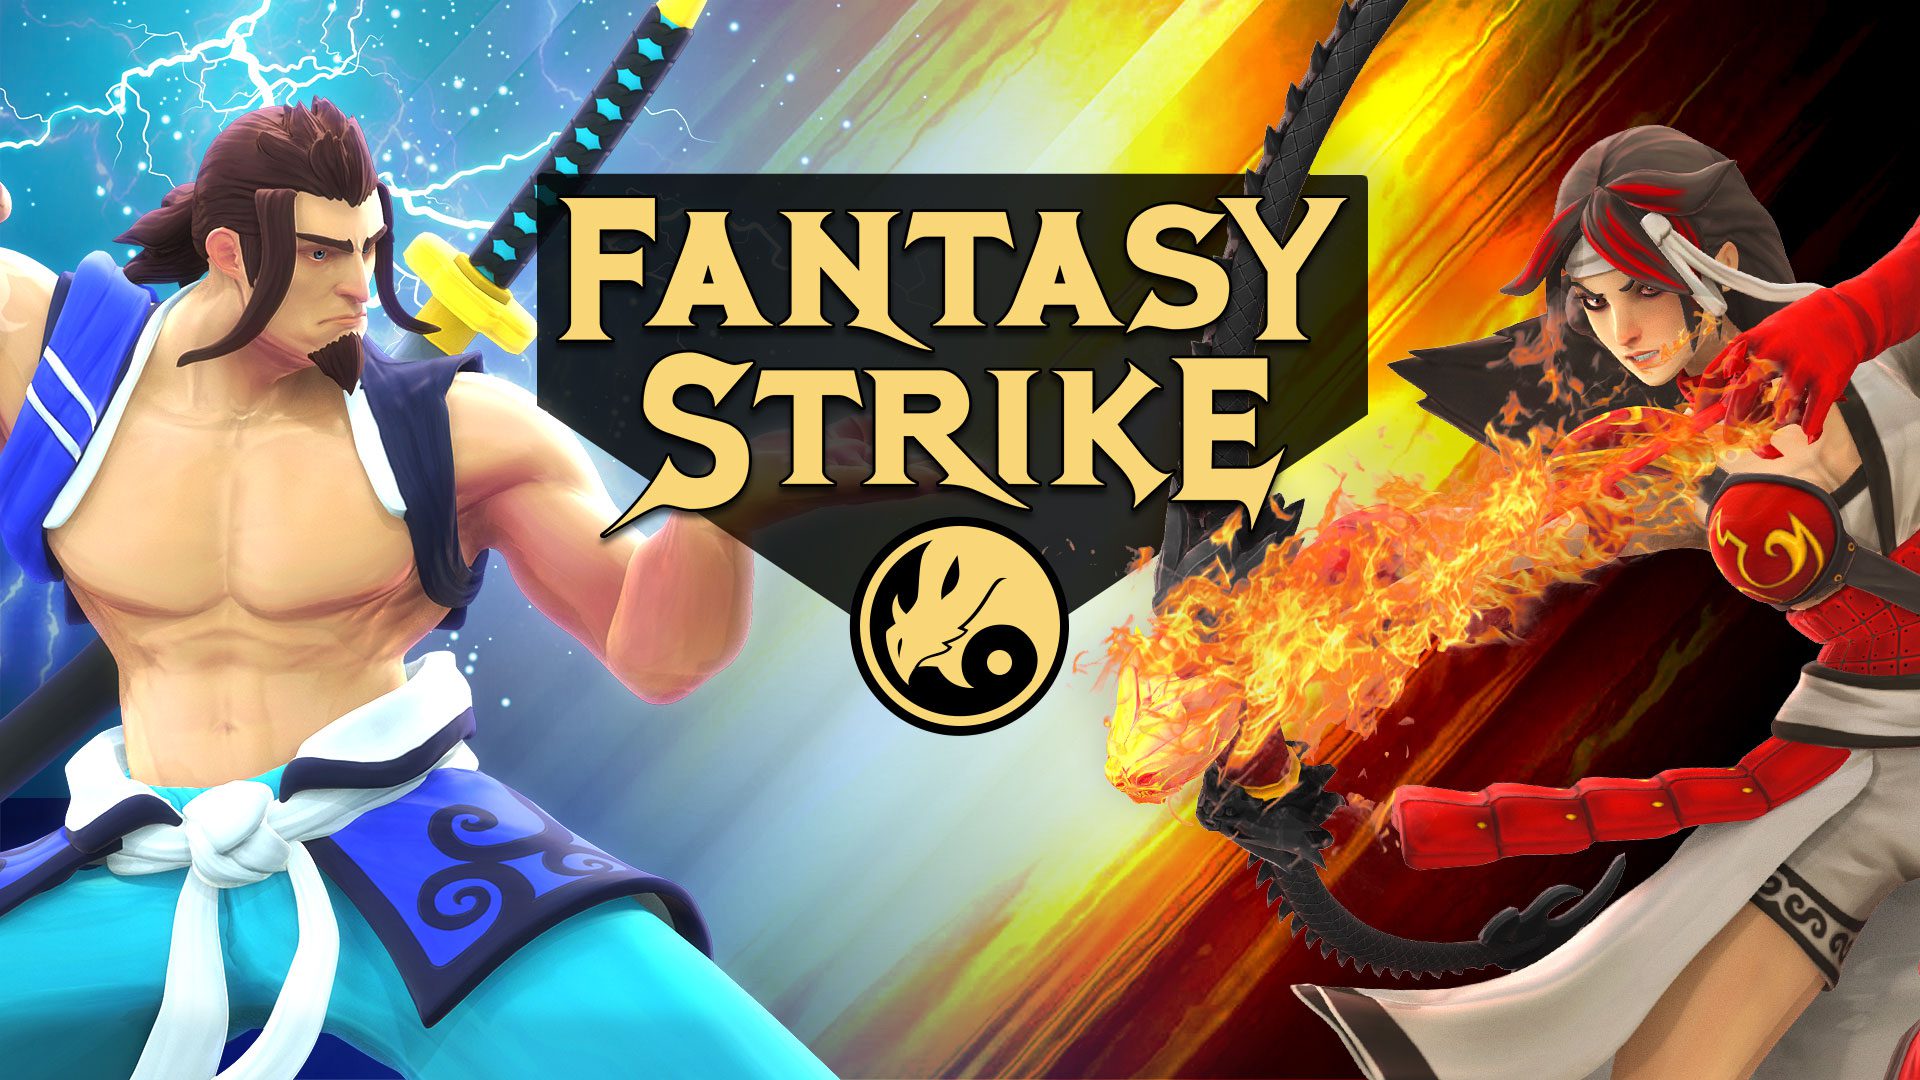 Fantasy Strike review: back to basics